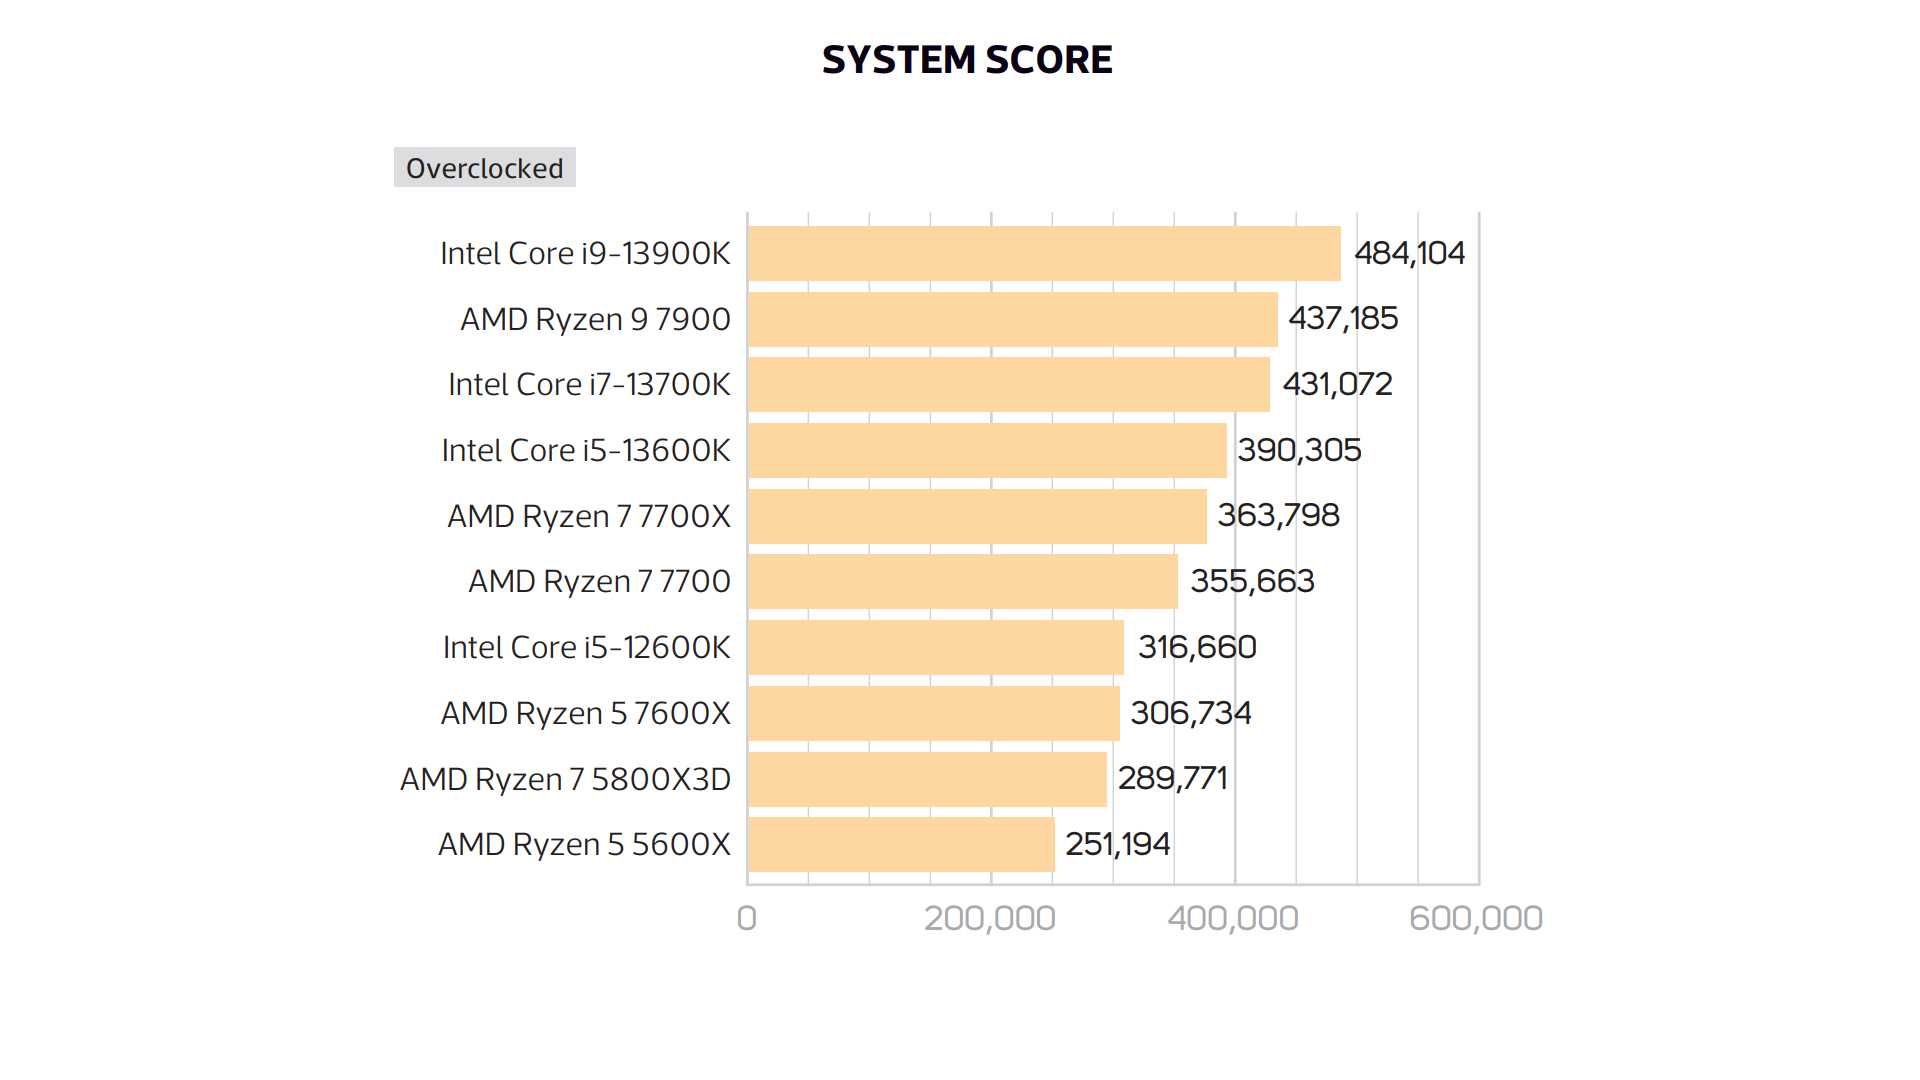 AMD Ryzen 5 7600X: The most popular Core i5 declassed 